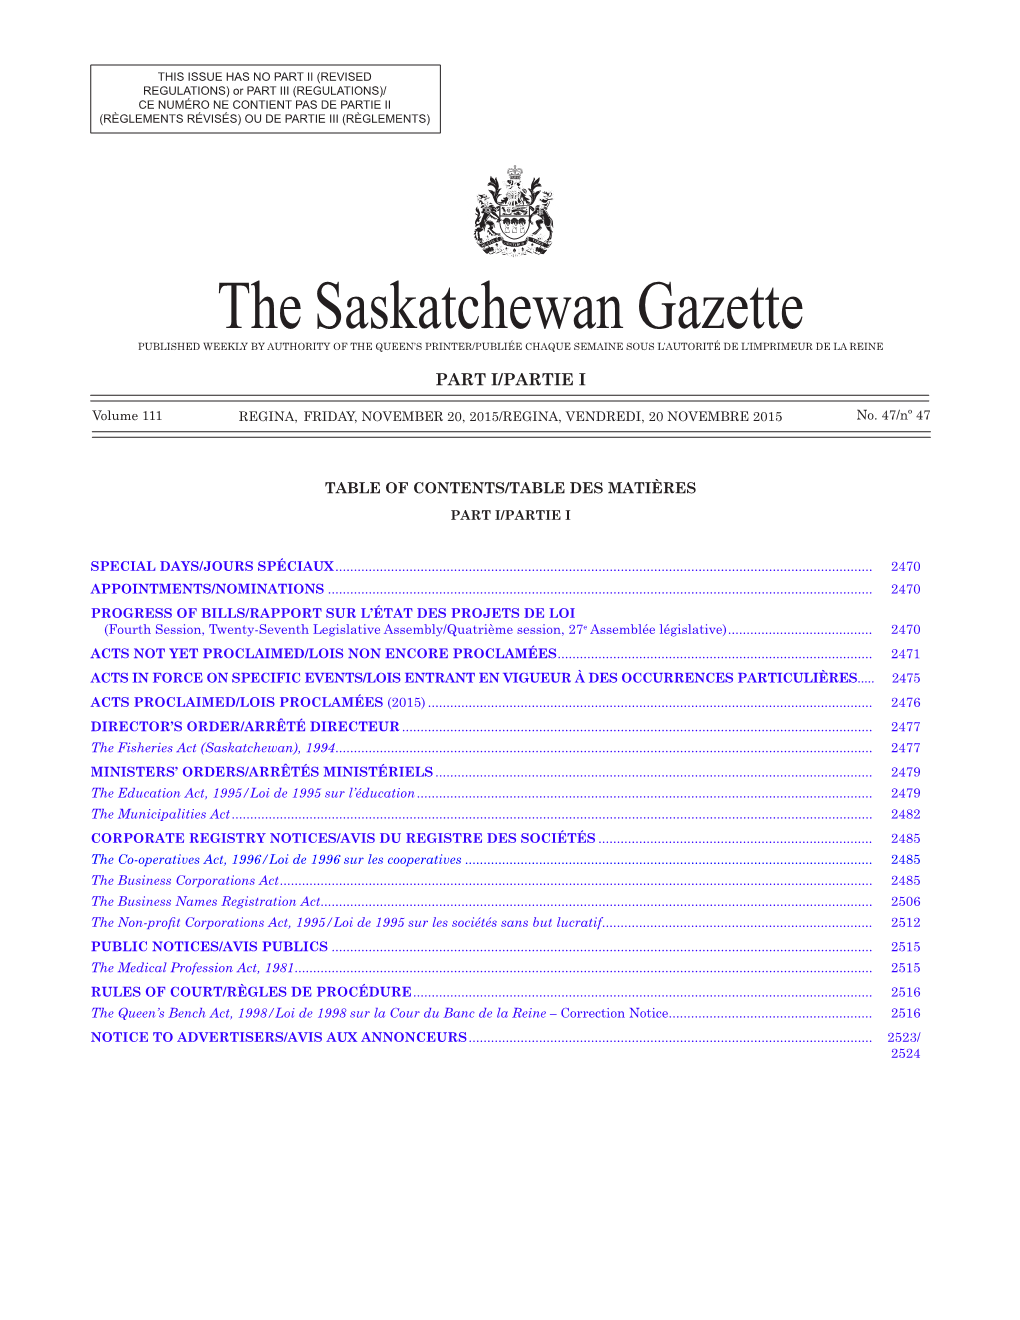 The Saskatchewan Gazette, November 20, 2015 2469